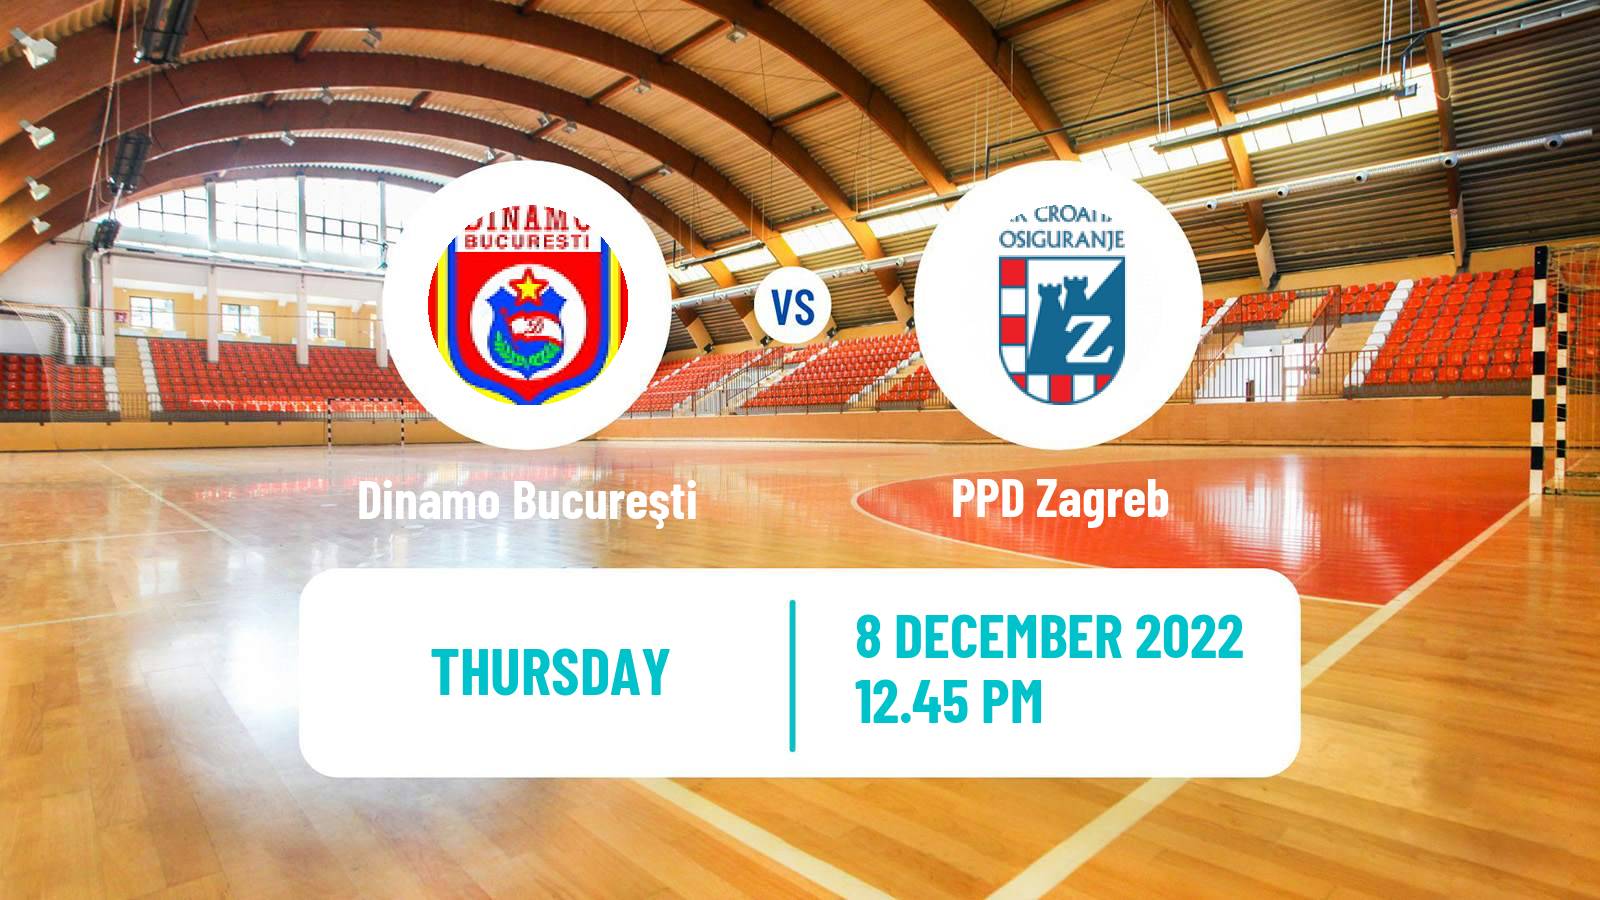 Handball EHF Champions League Dinamo Bucureşti - PPD Zagreb